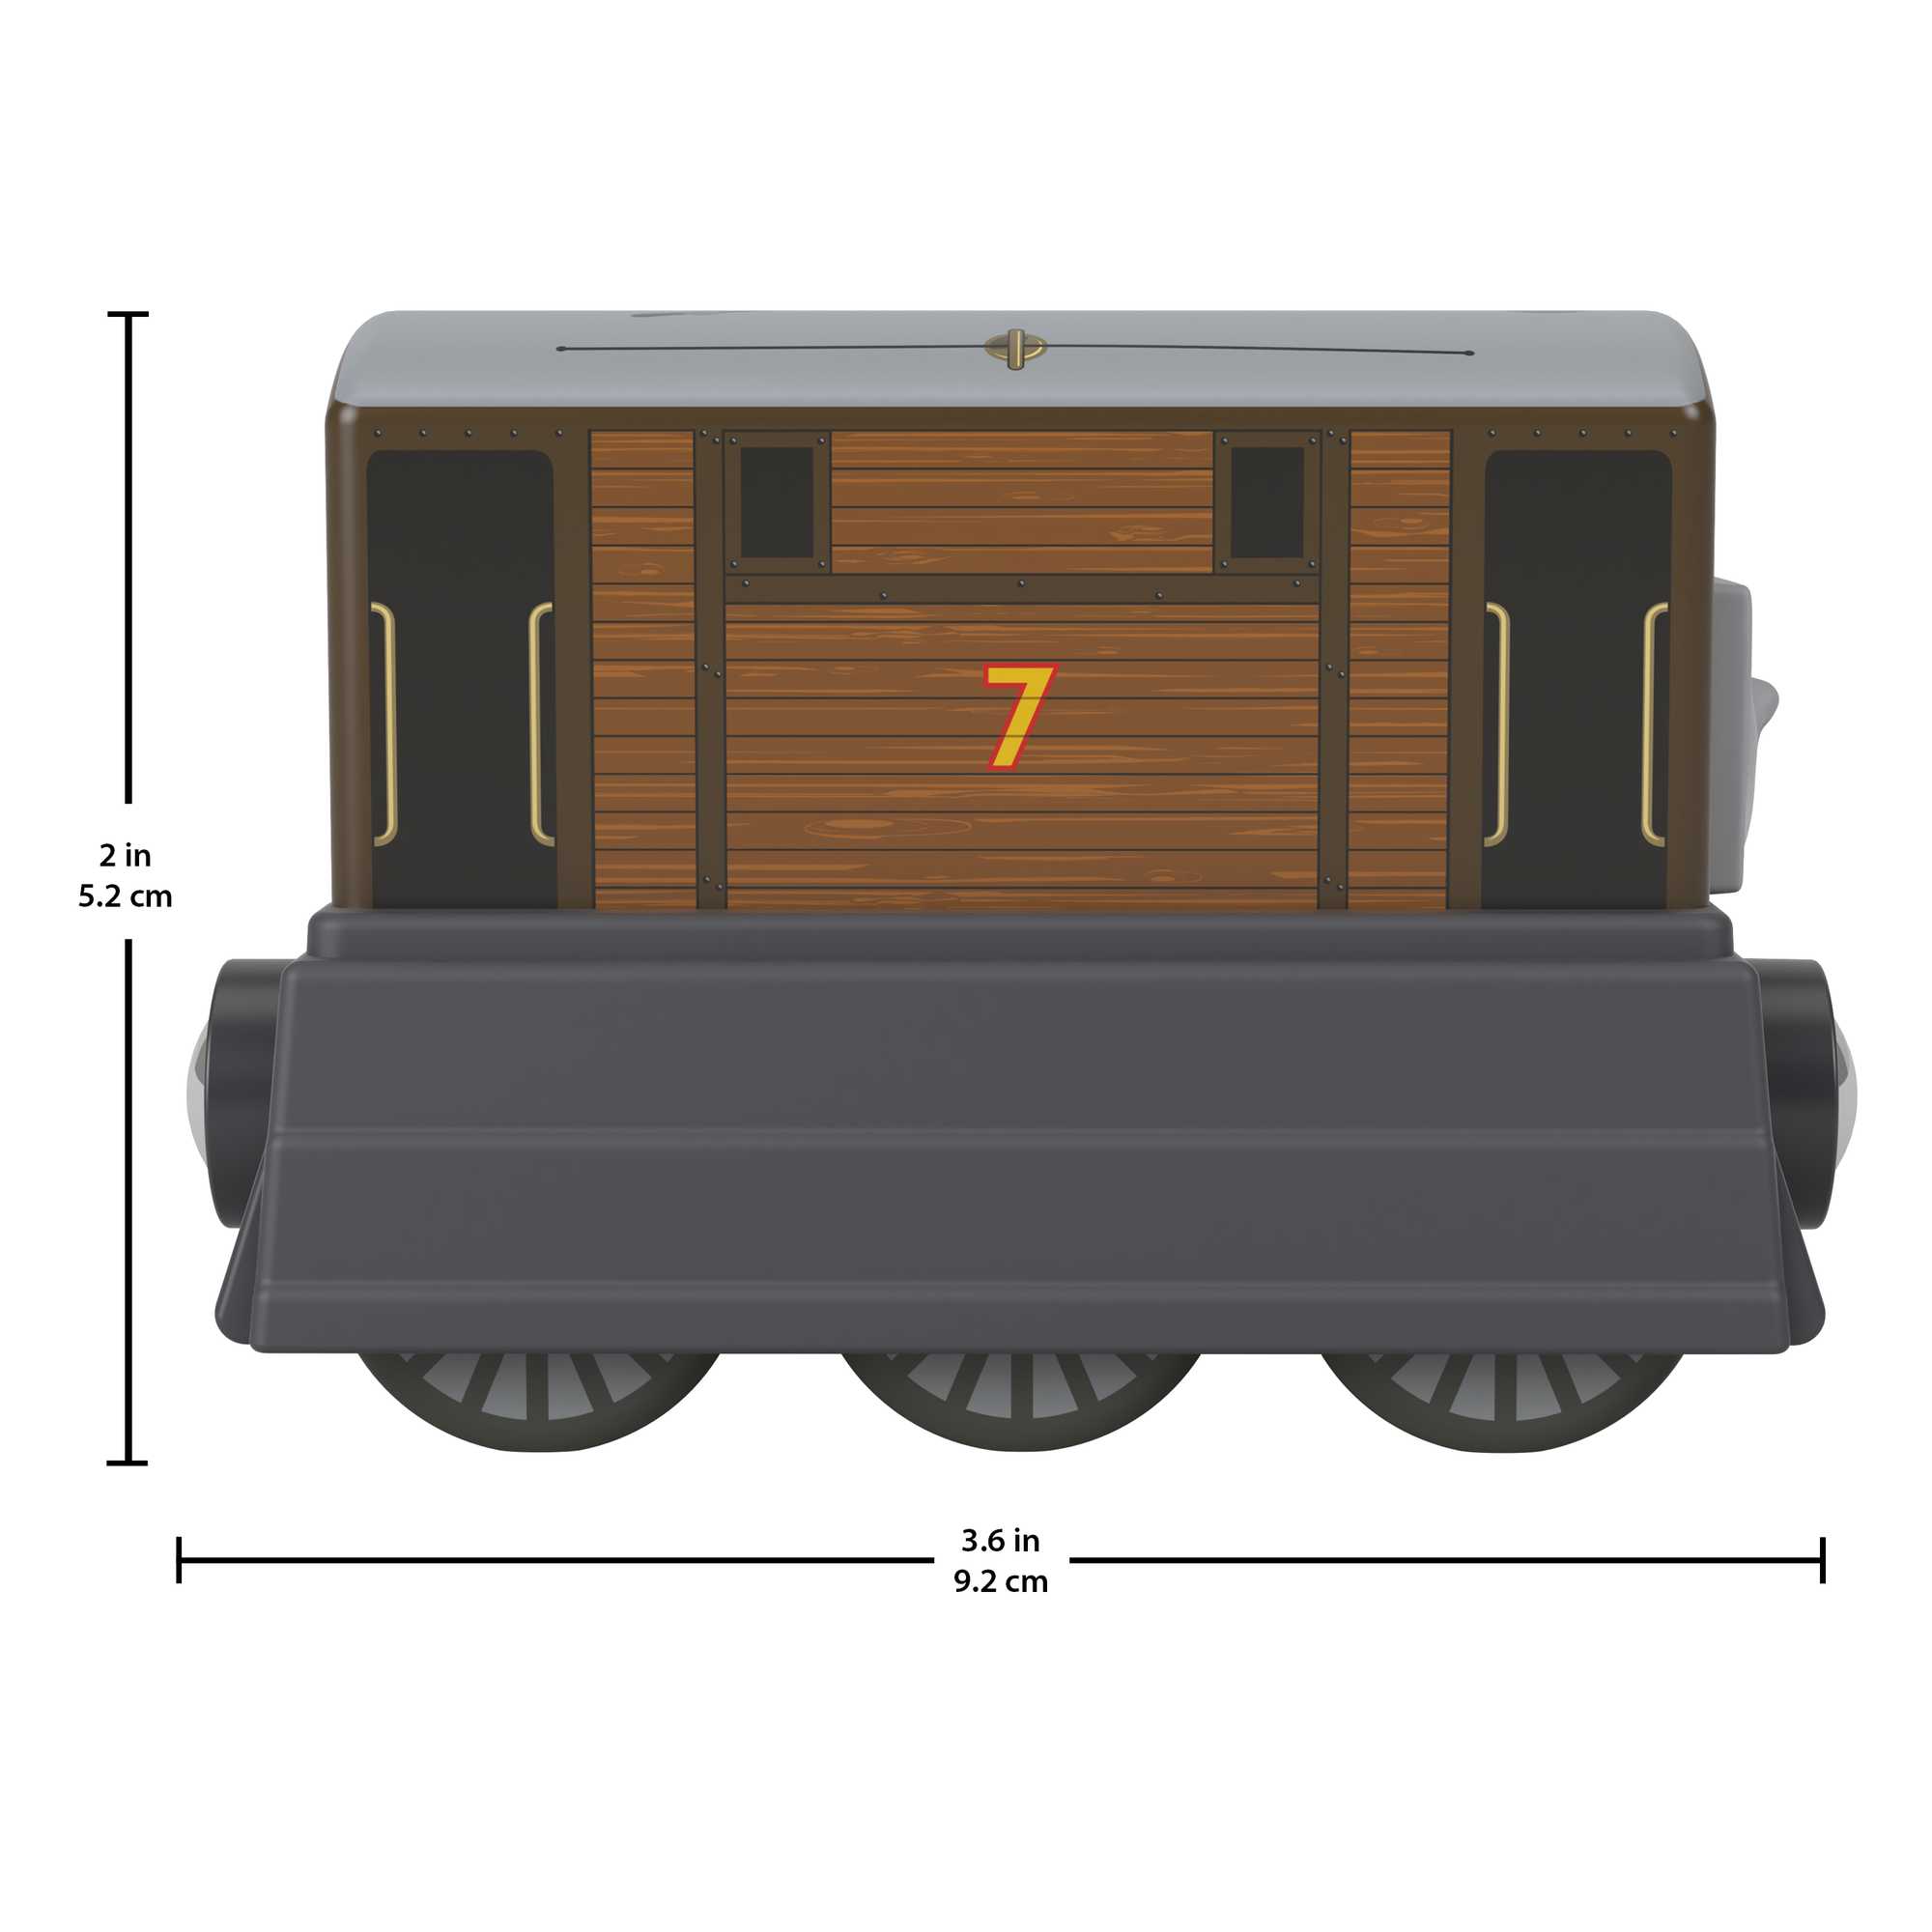 Thomas & Friends Wooden Railway Toby Engine | Mattel